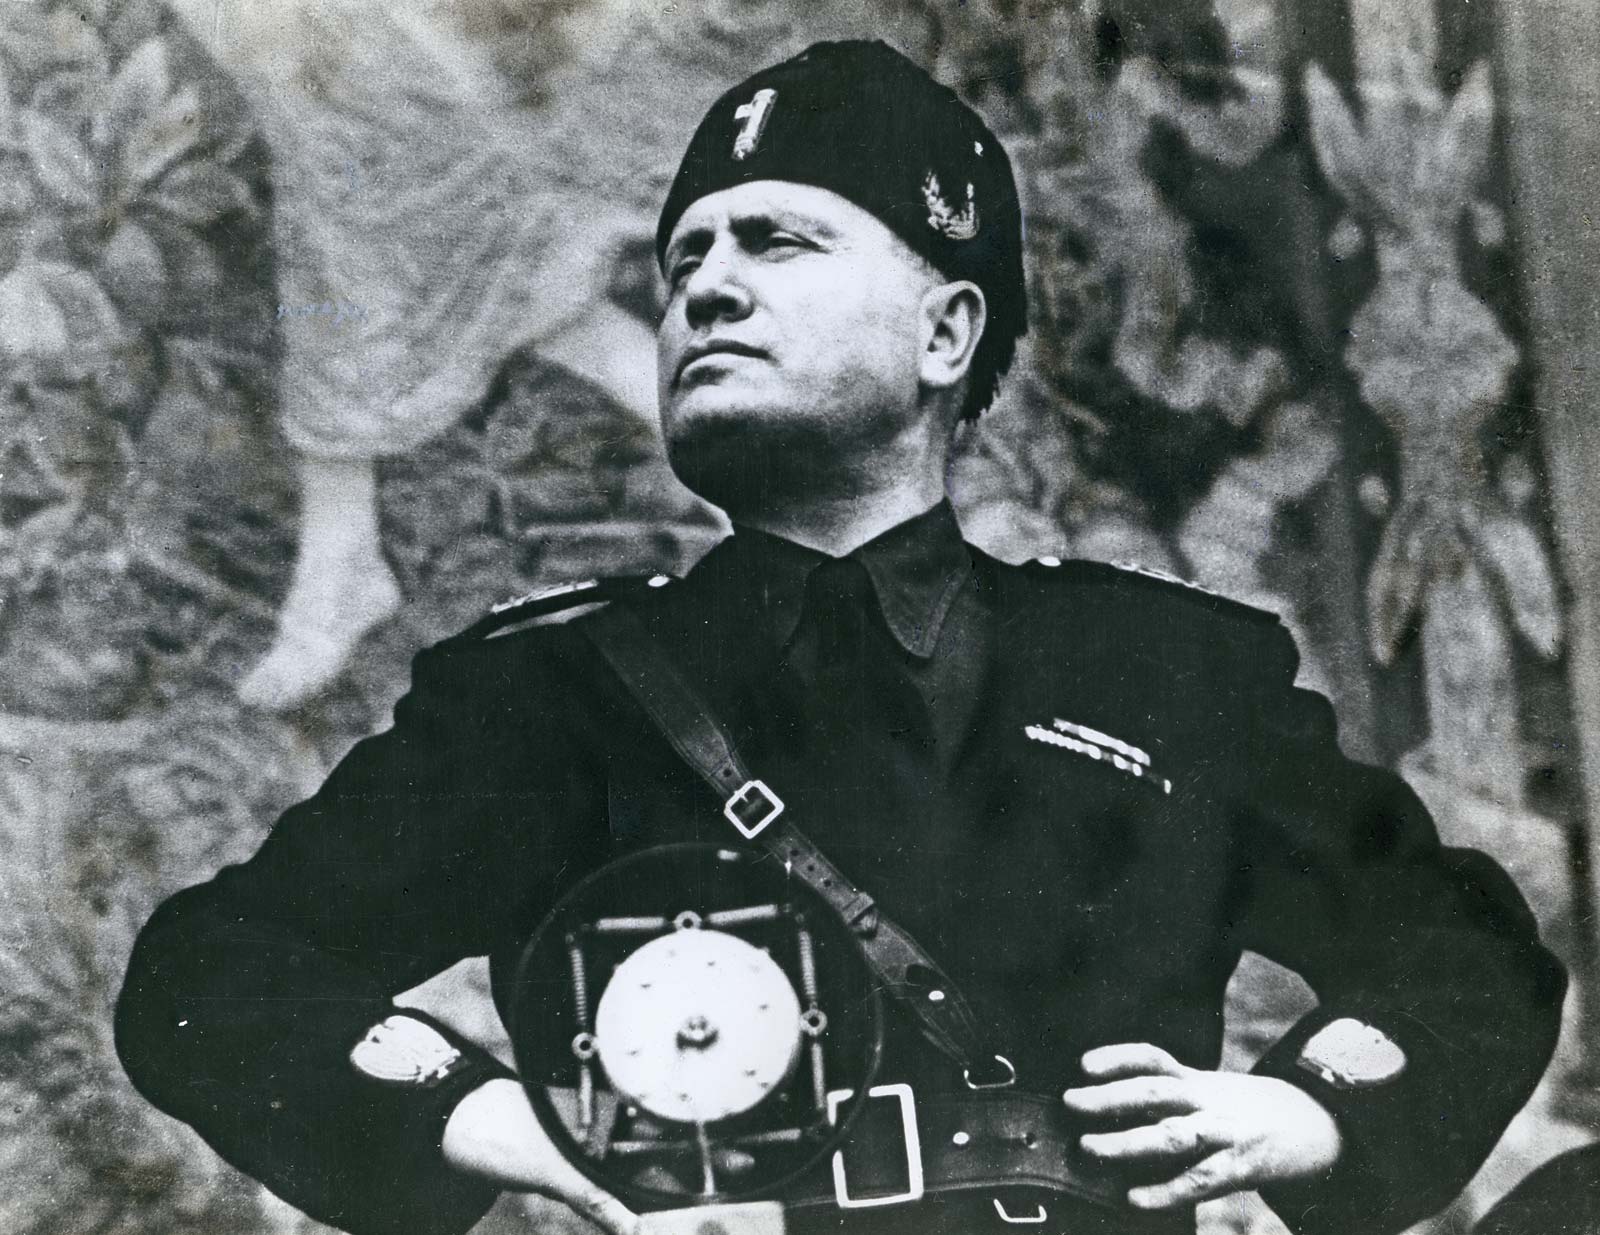 Revisiting Pasolini’s Salò on Mussolini’s Birthday